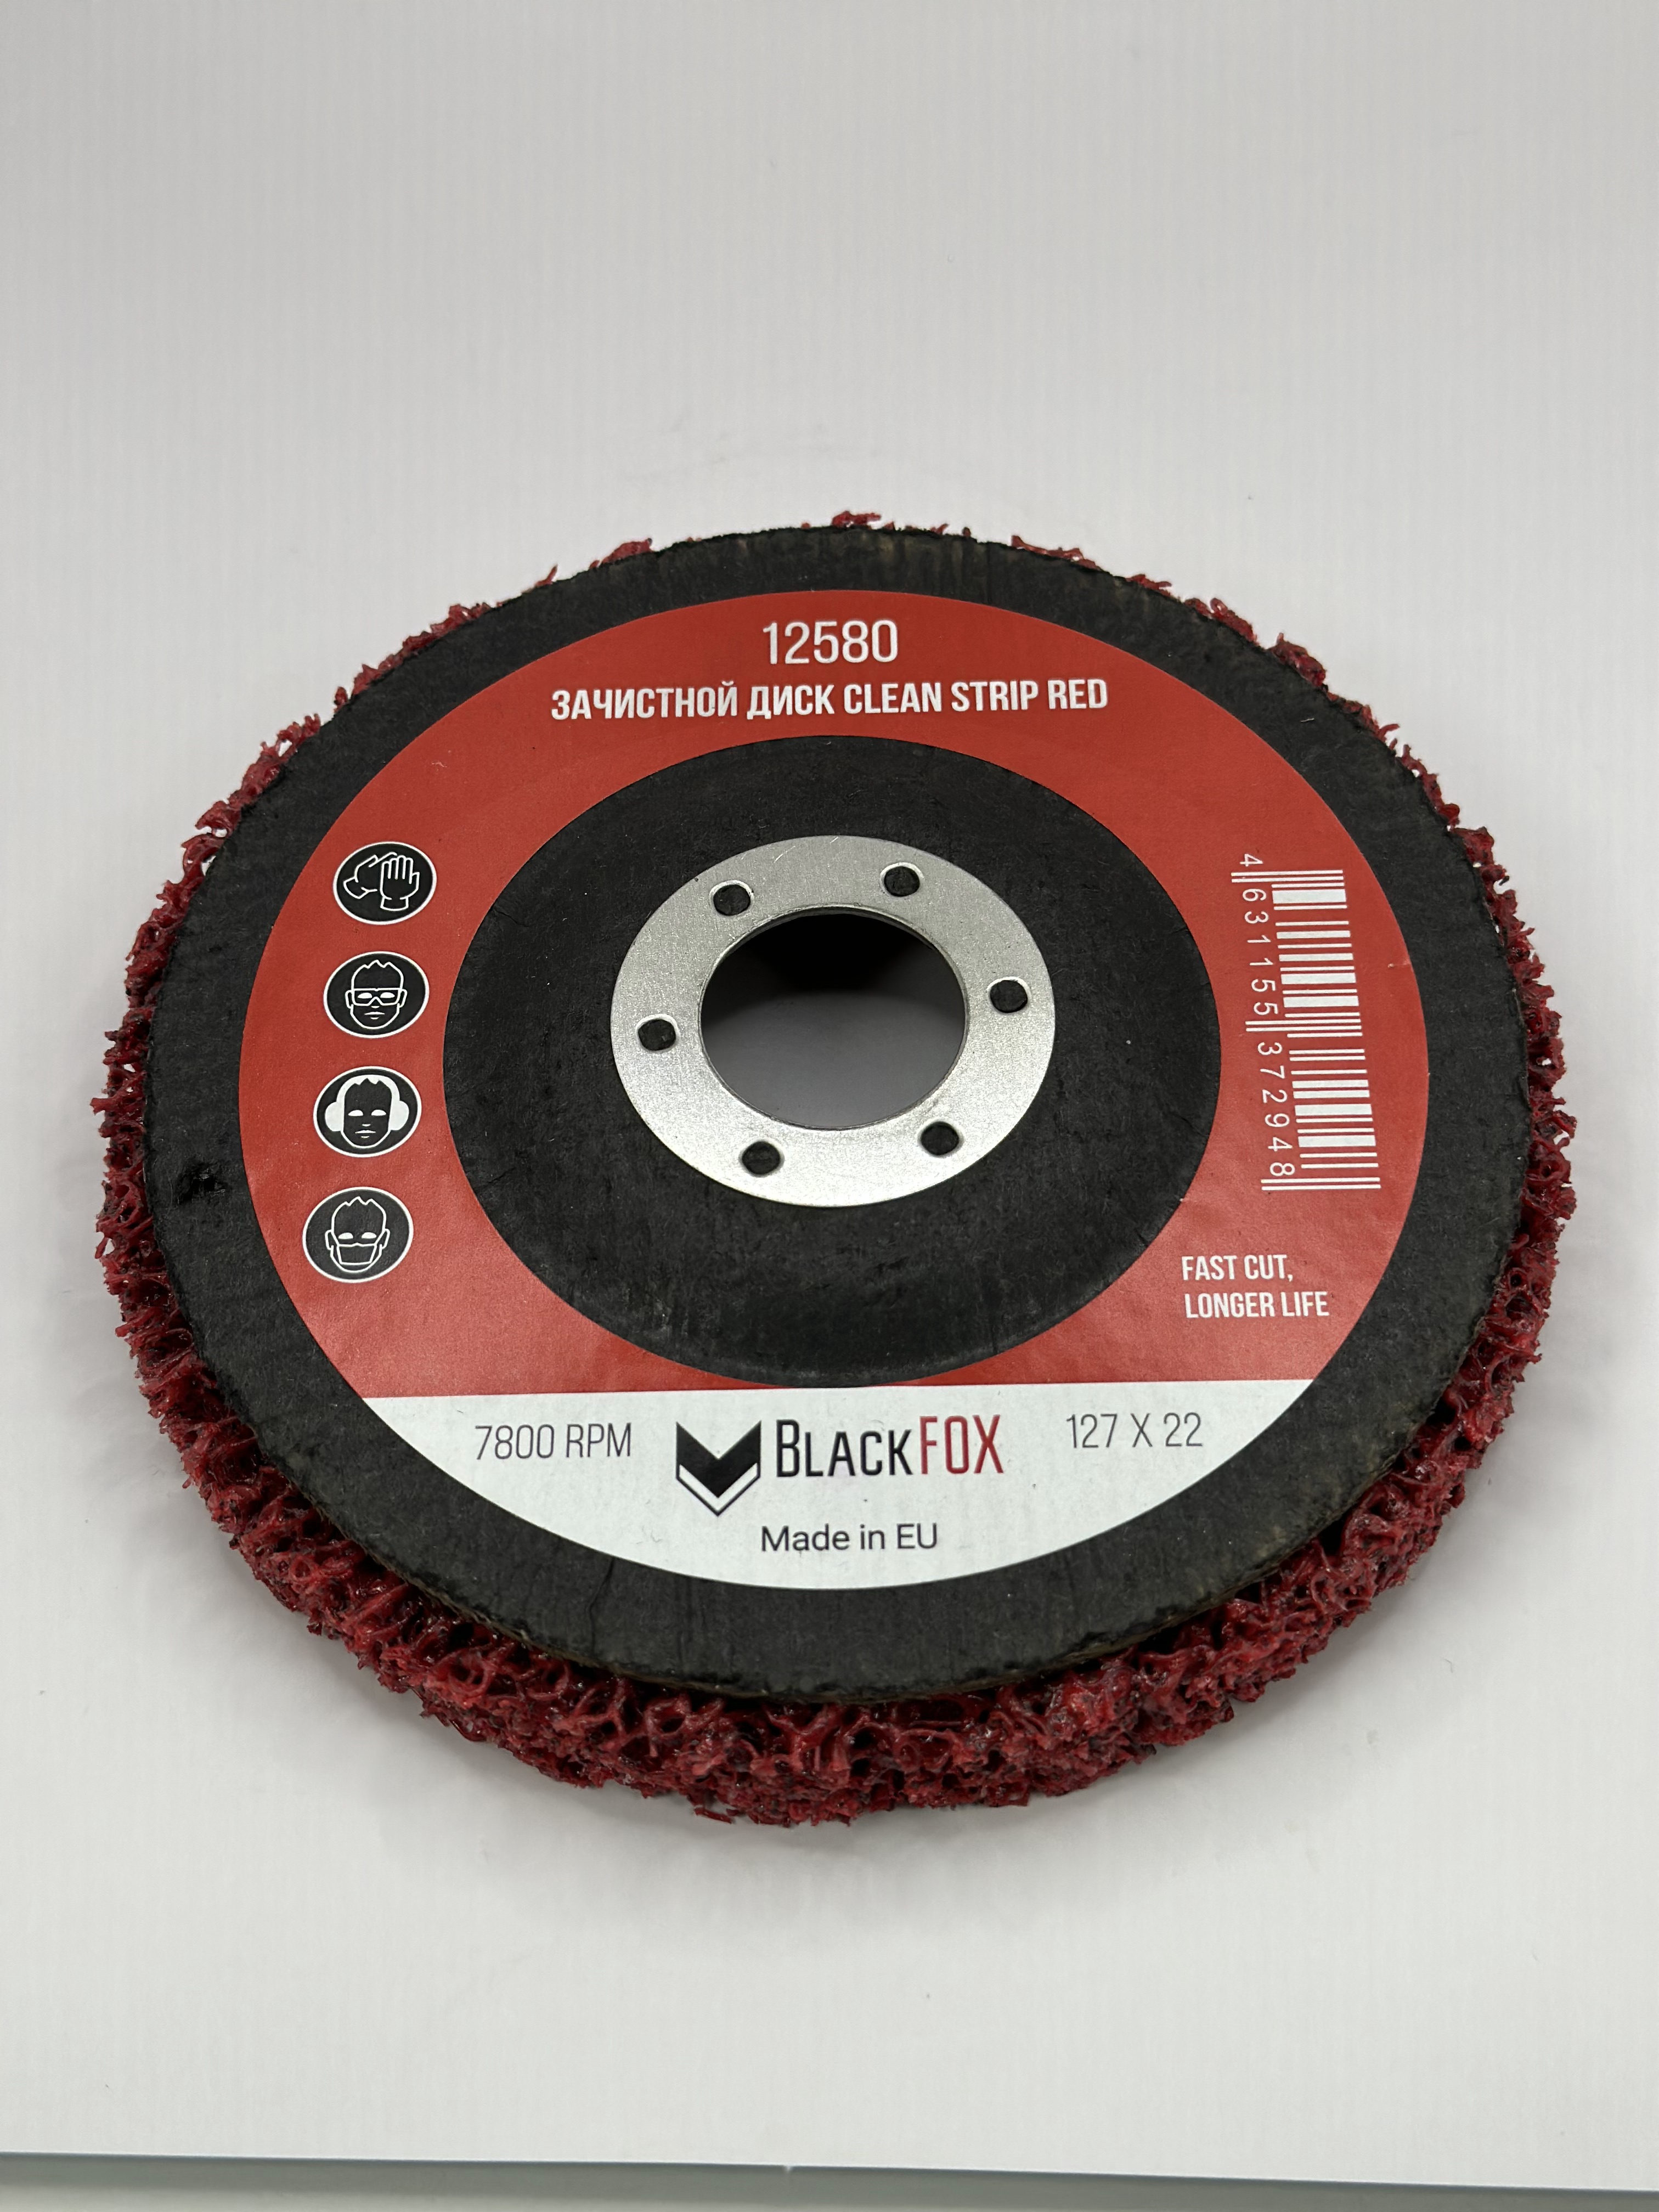 12580 BlackFox Диск Clean Strip RED для удаления ЛКП, фибр.оправка под УШМ, отверстие 22 мм, 127х22мм